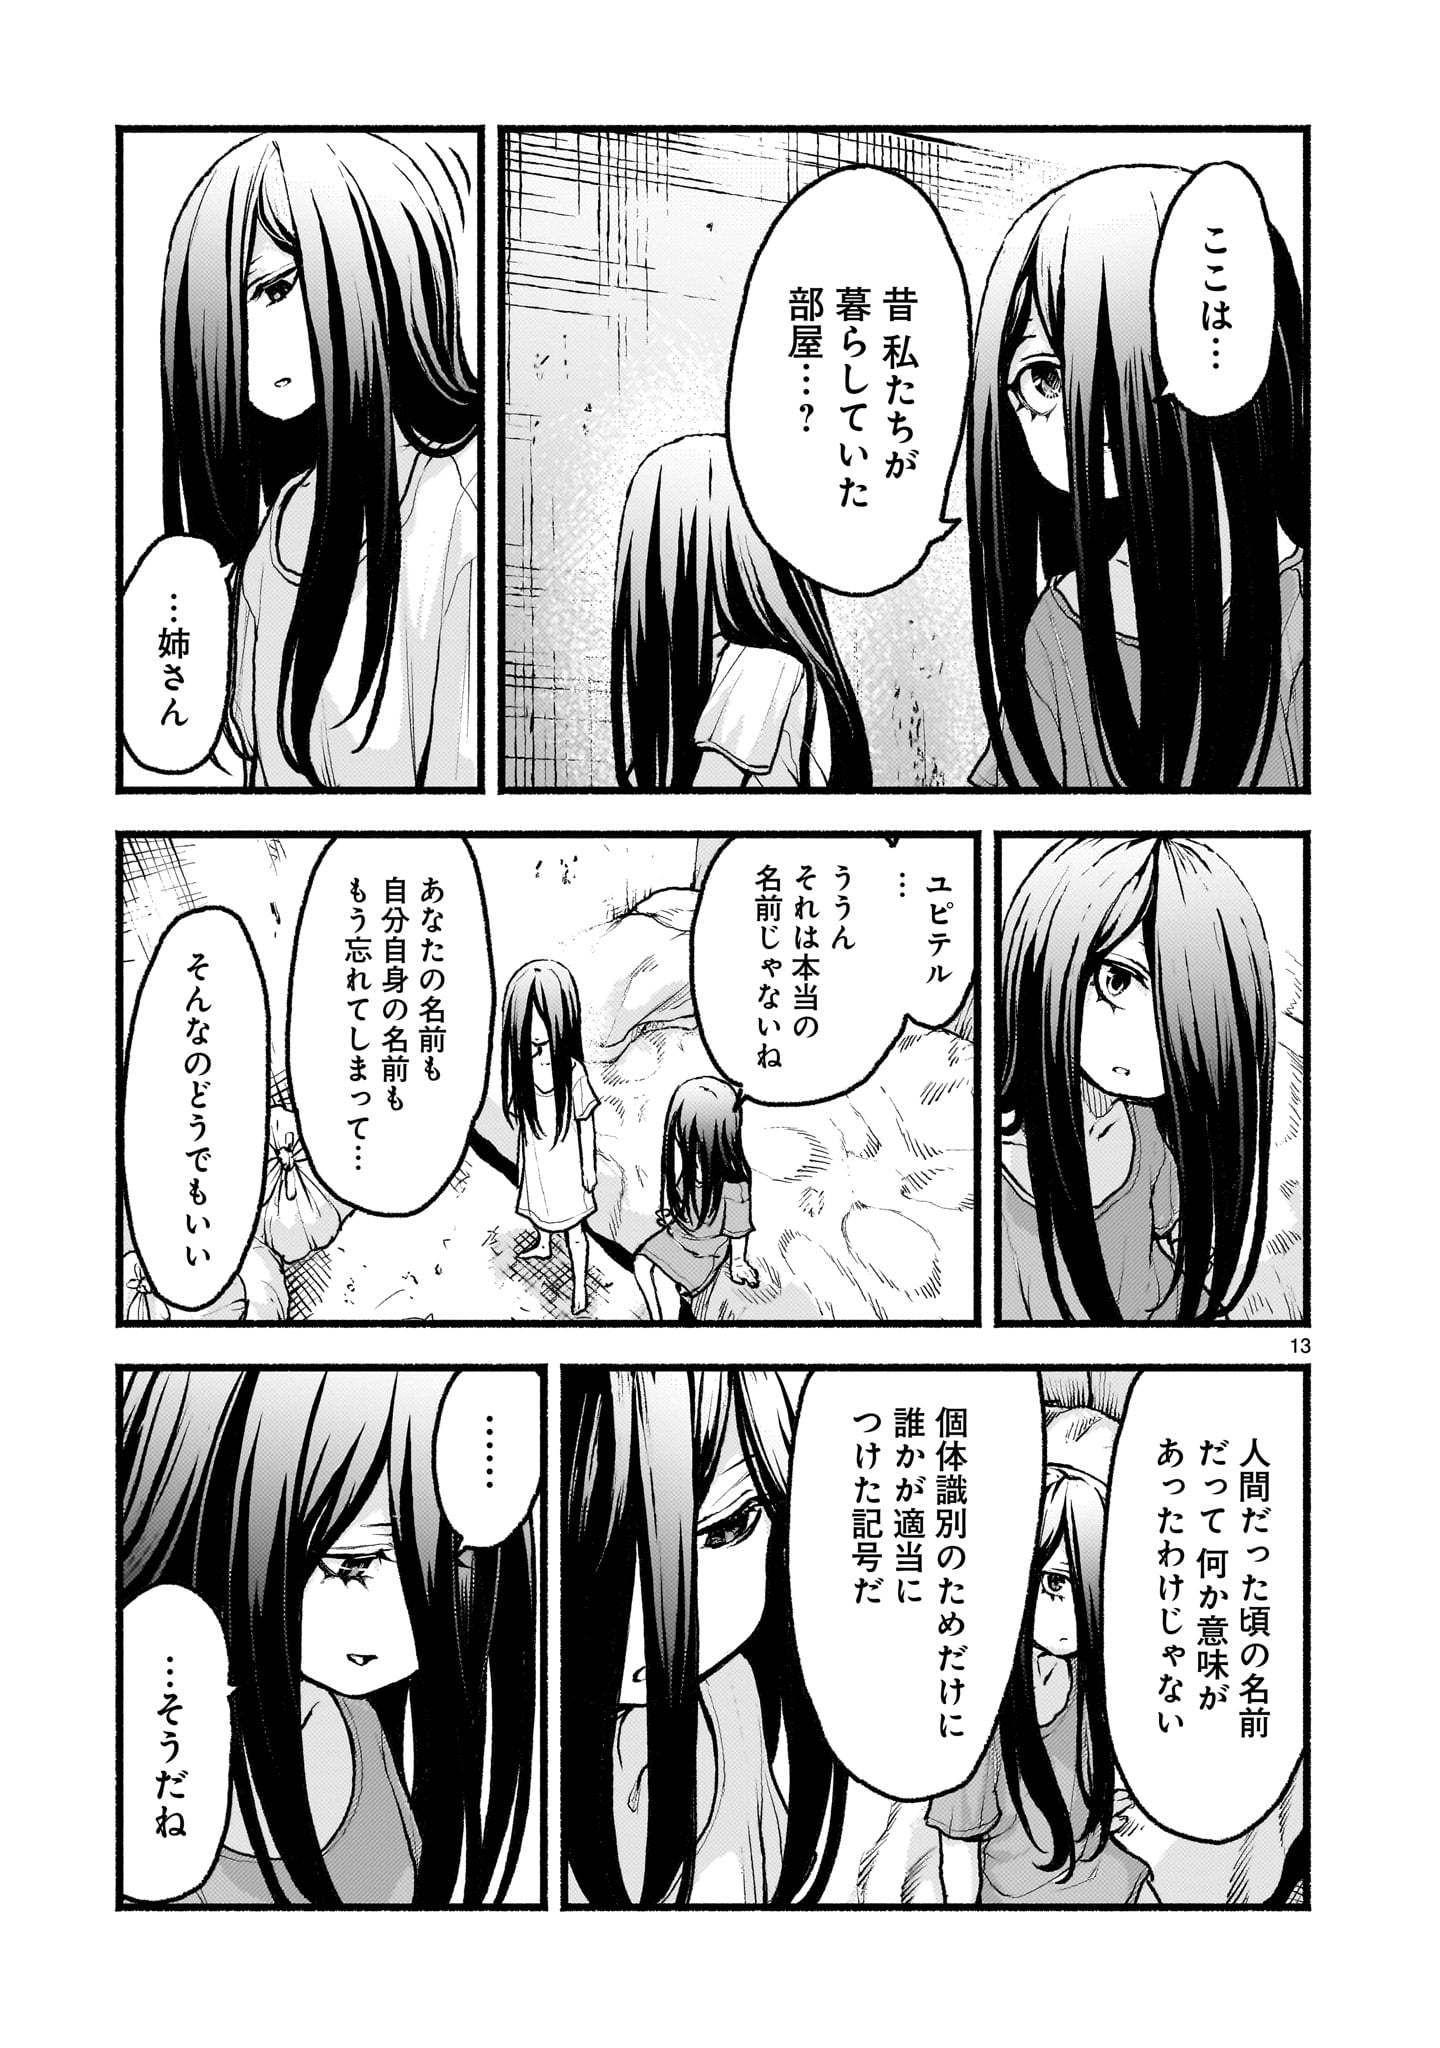 Kaminaki Sekai no Kamisama Katsudou - Chapter 54.1 - Page 13